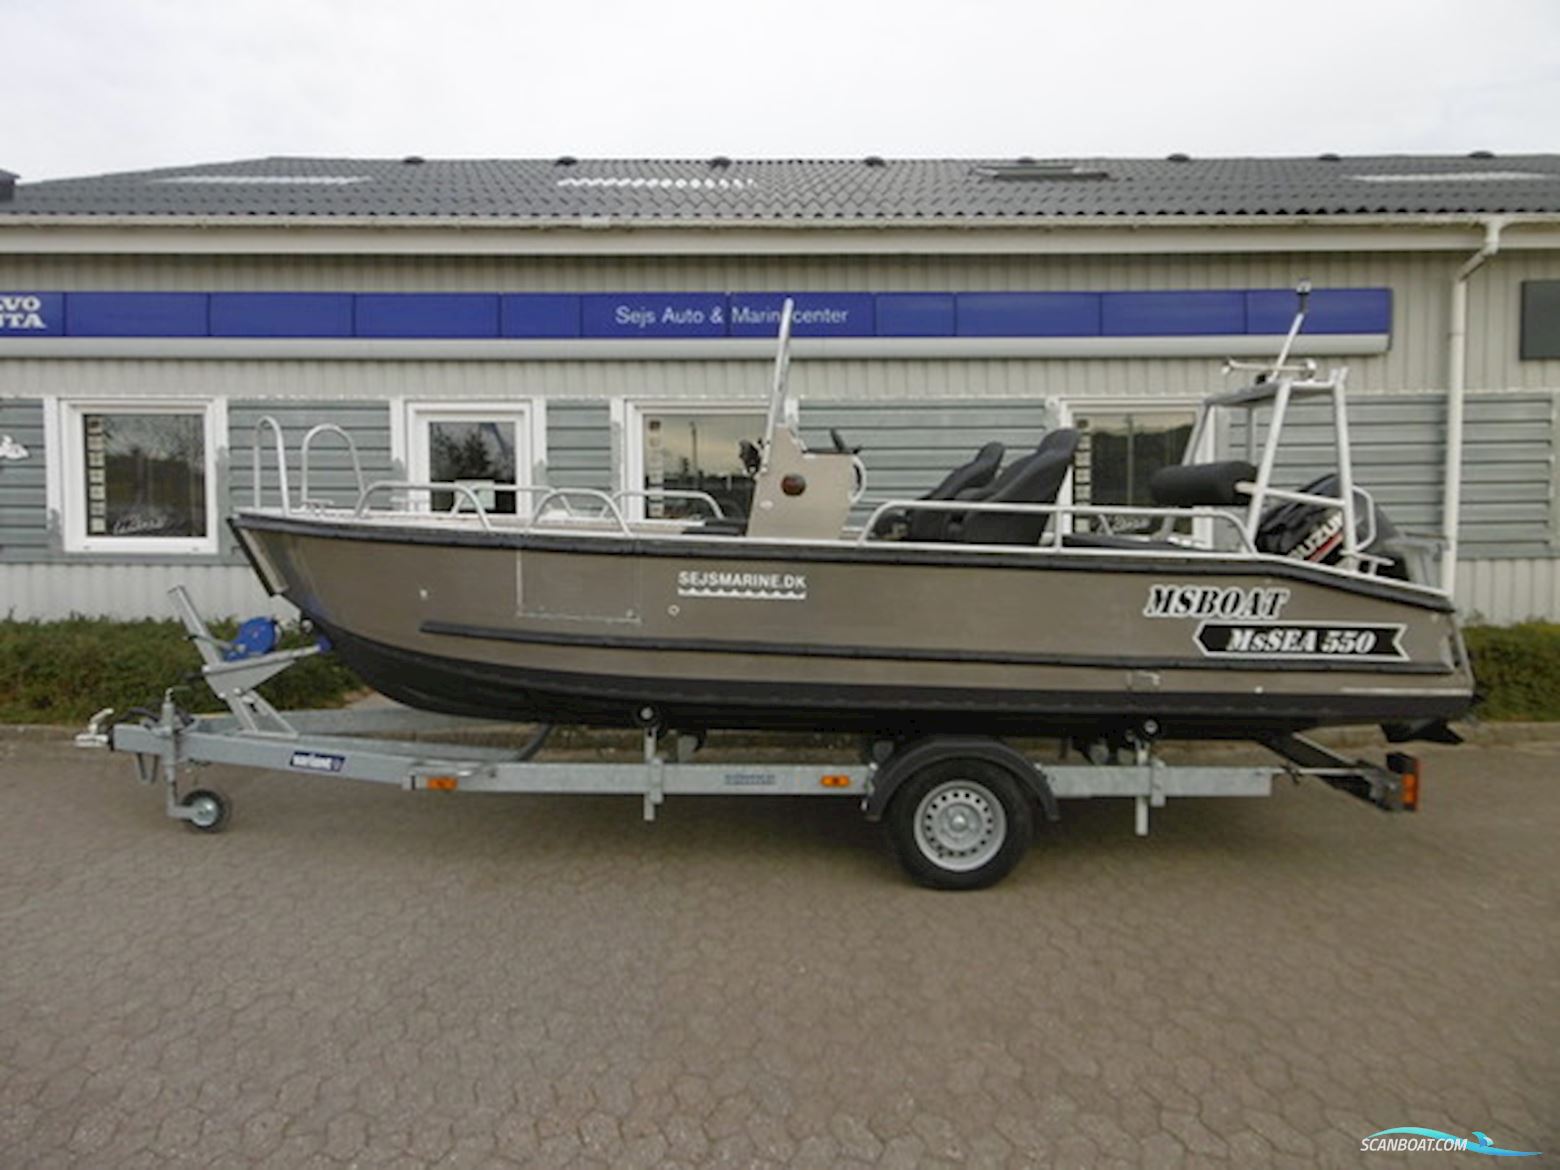 MS SEA 550 Motor boat 2022, Denmark